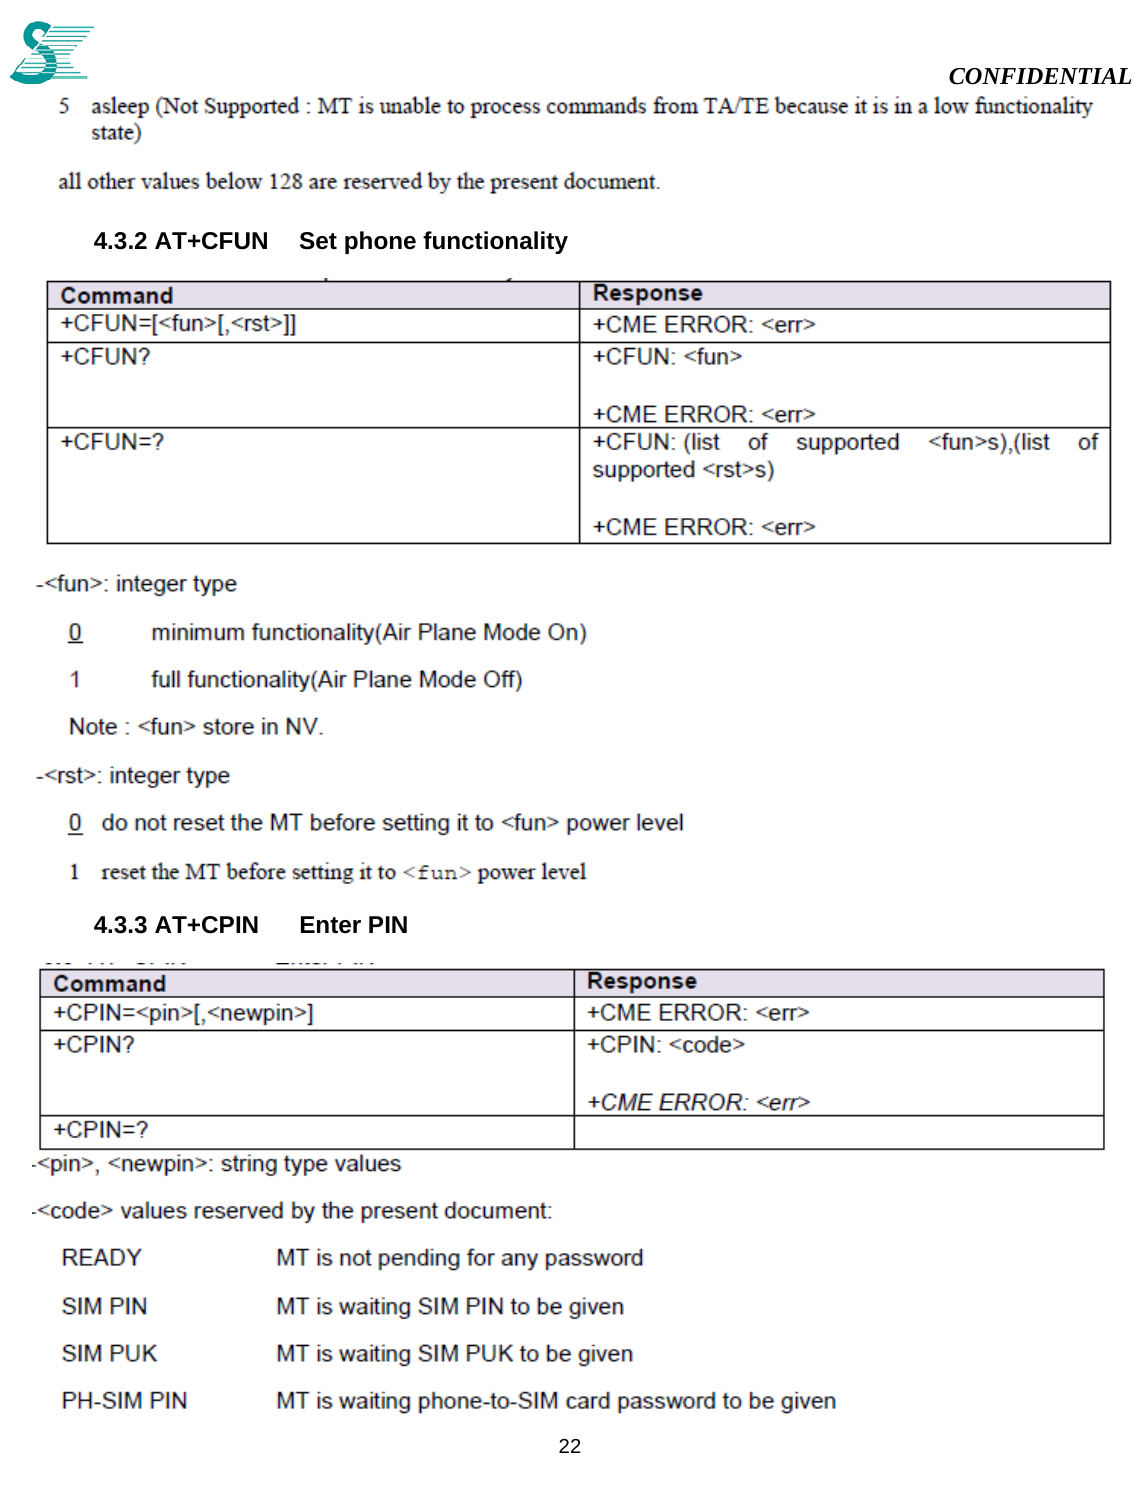                                                                                                                                                                                             CONFIDENTIAL           22   4.3.2 AT+CFUN  Set phone functionality   4.3.3 AT+CPIN  Enter PIN   